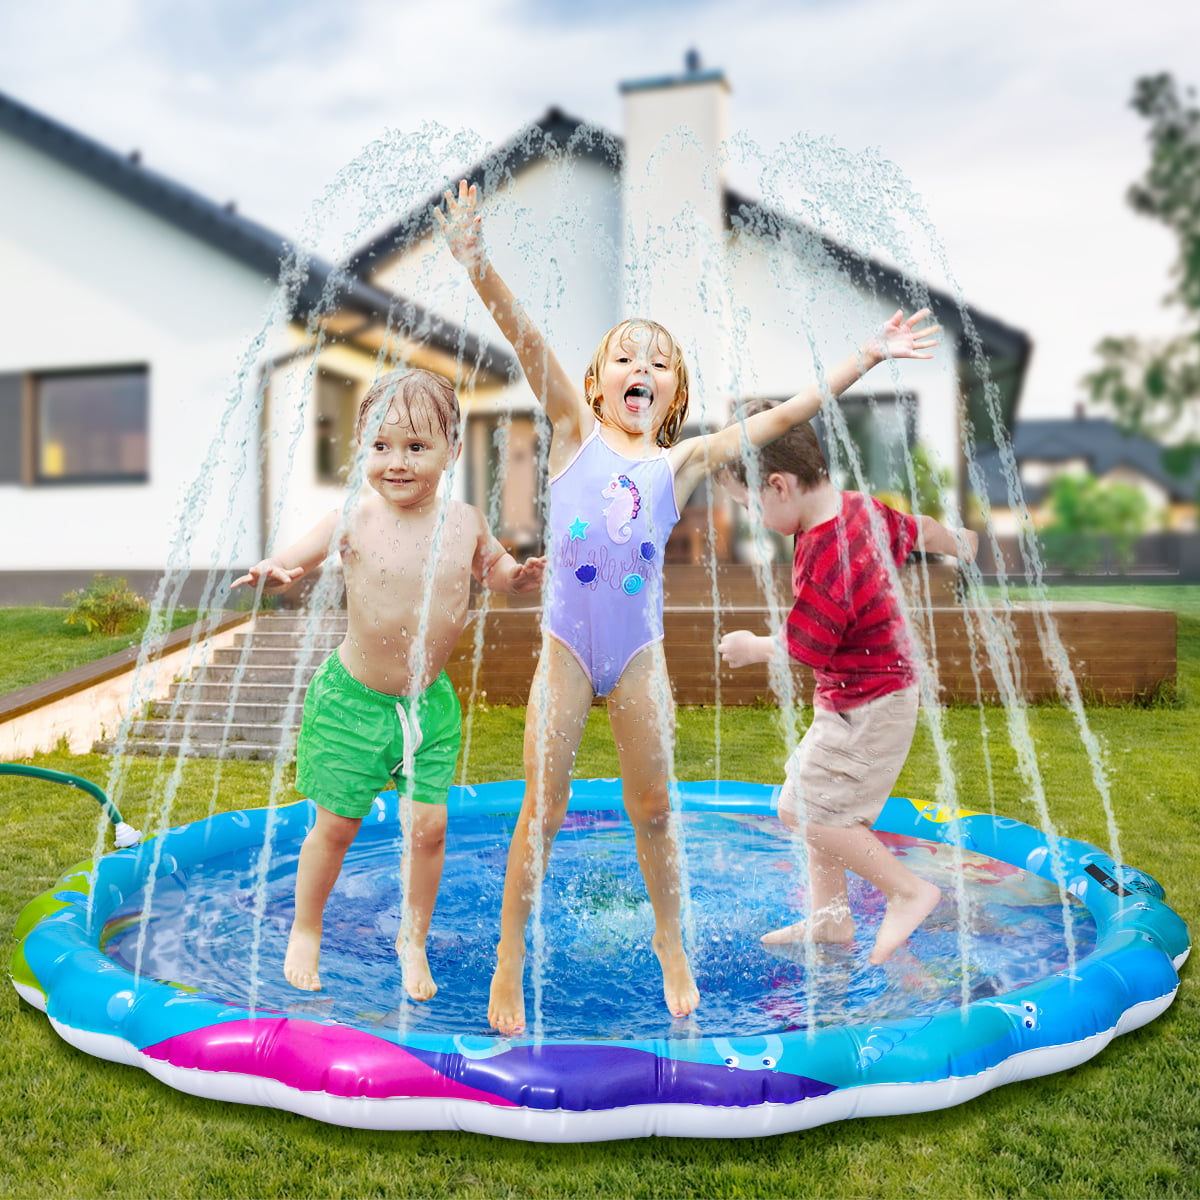 Boys & Girls 65" Splash N' Fun Outdoor Inflatable Sprinkler Mat for Toddlers 